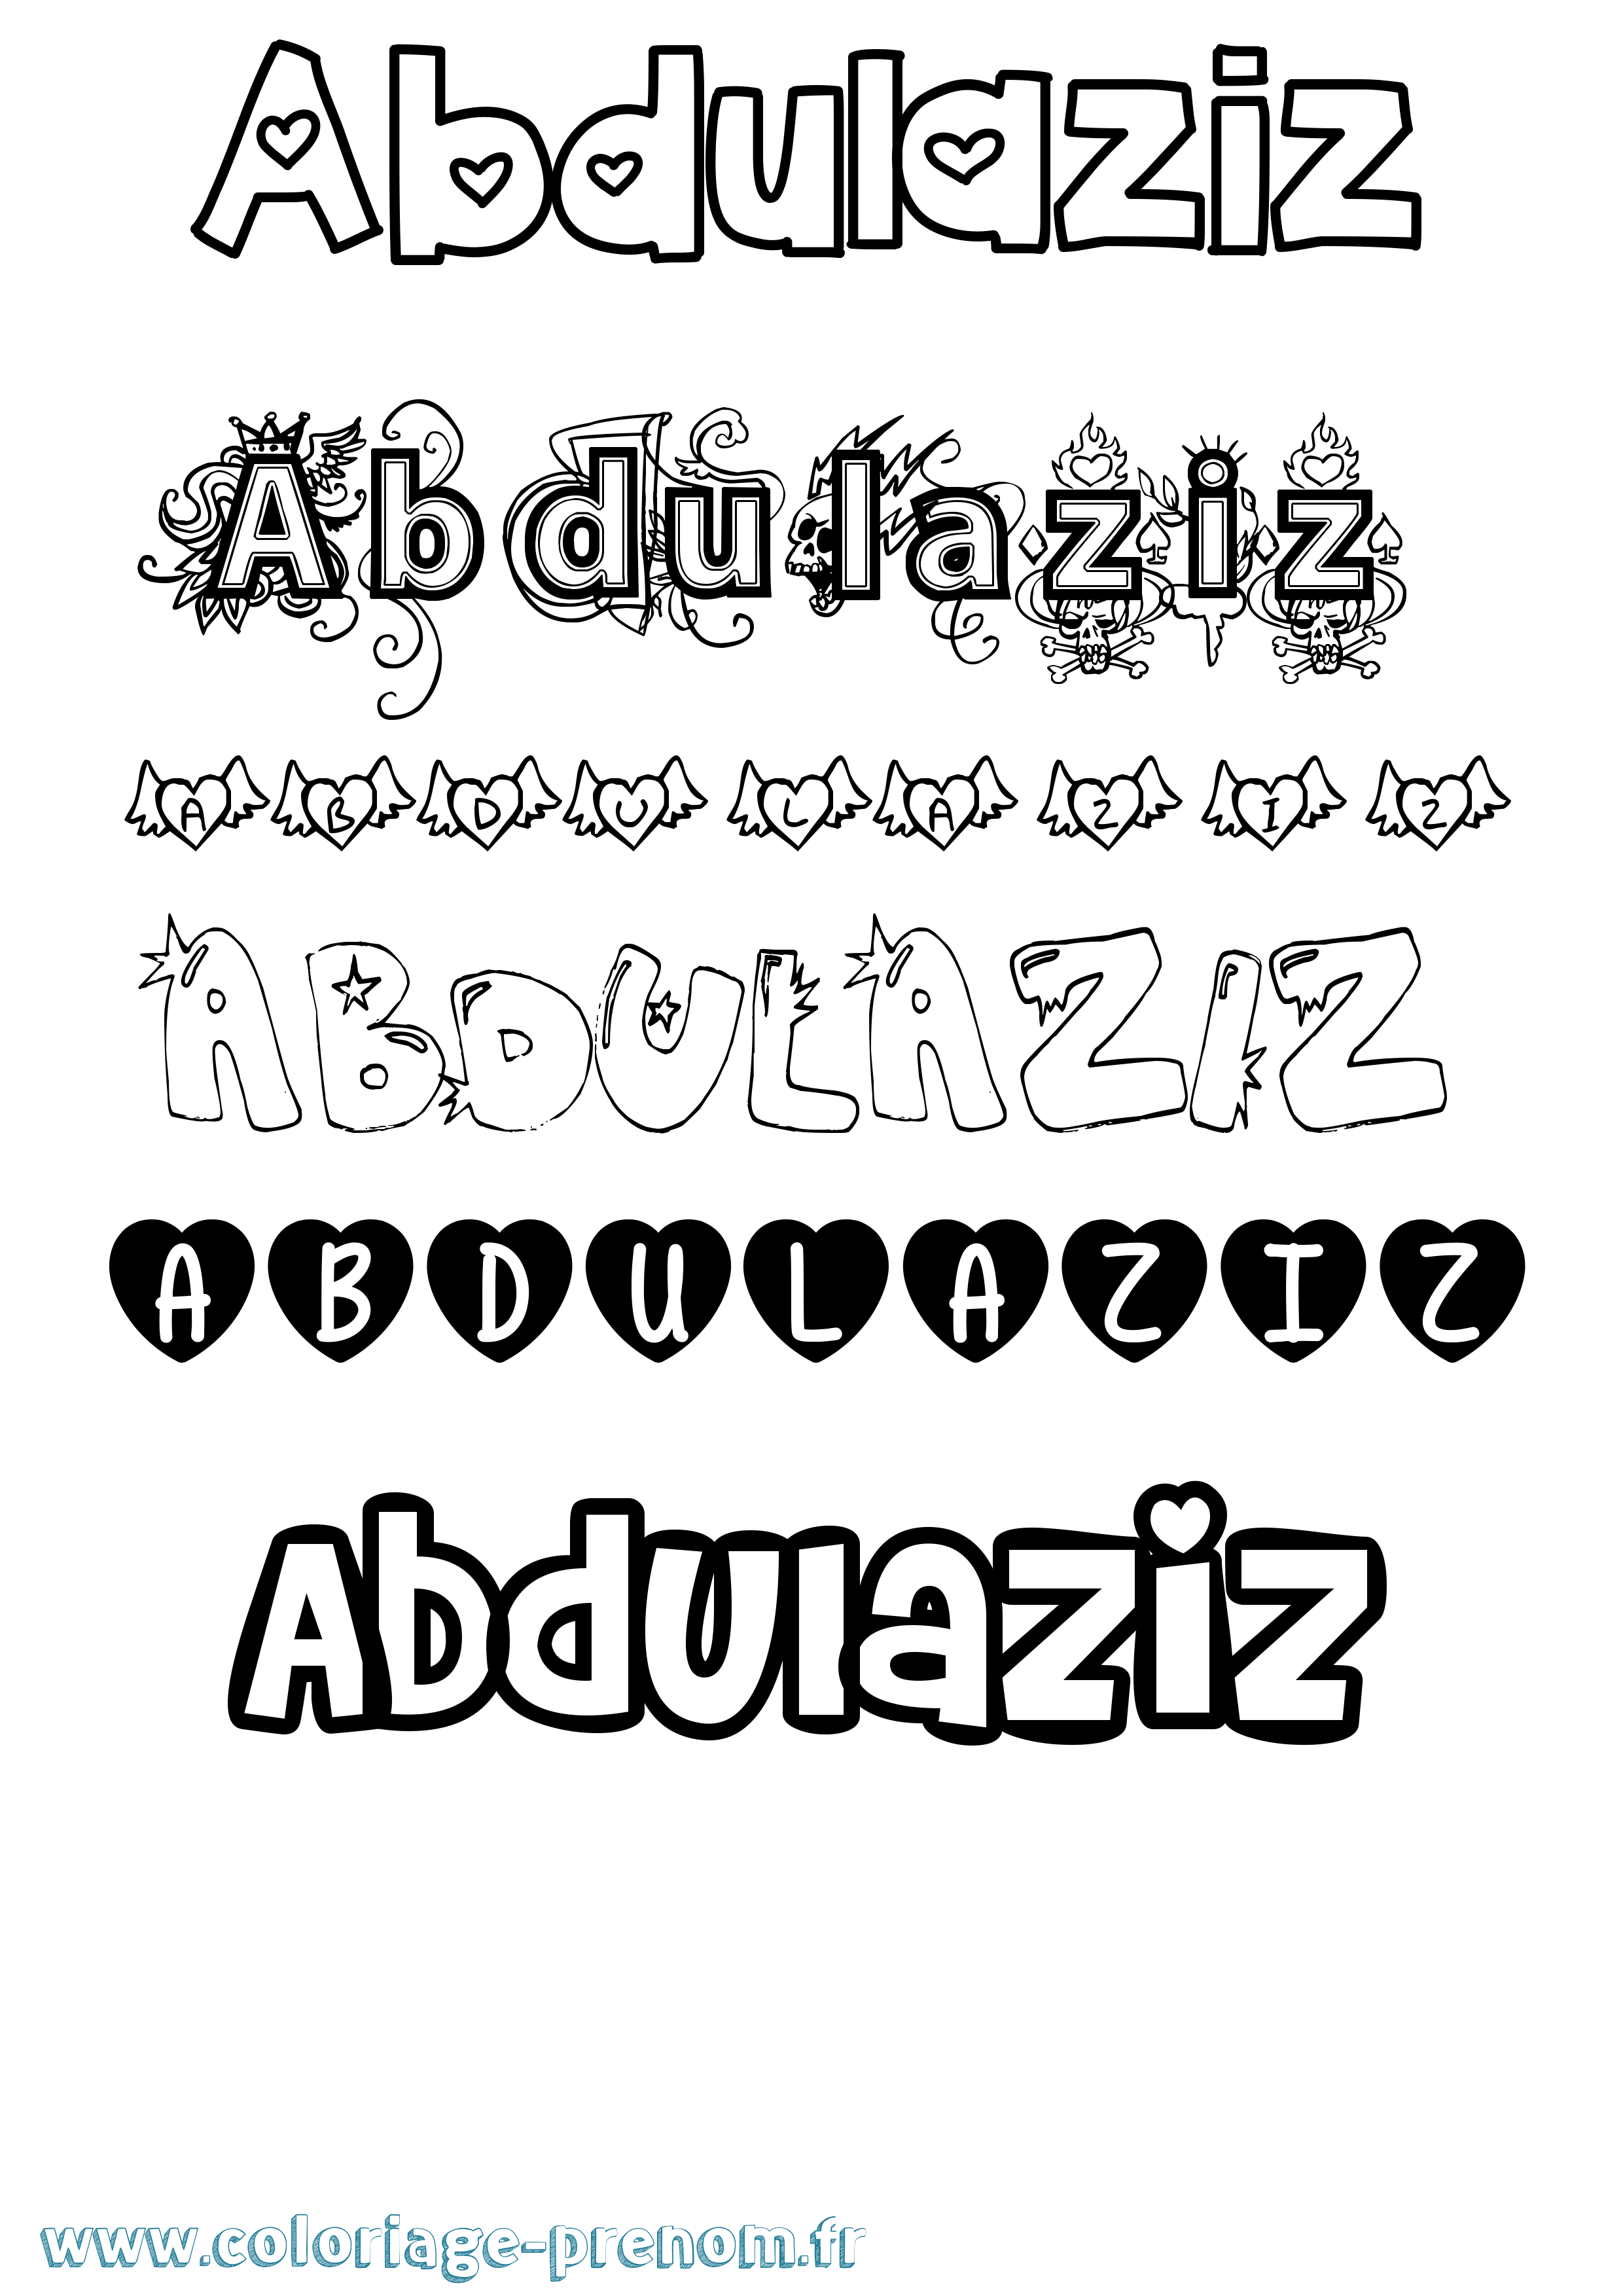 Coloriage prénom Abdulaziz Girly